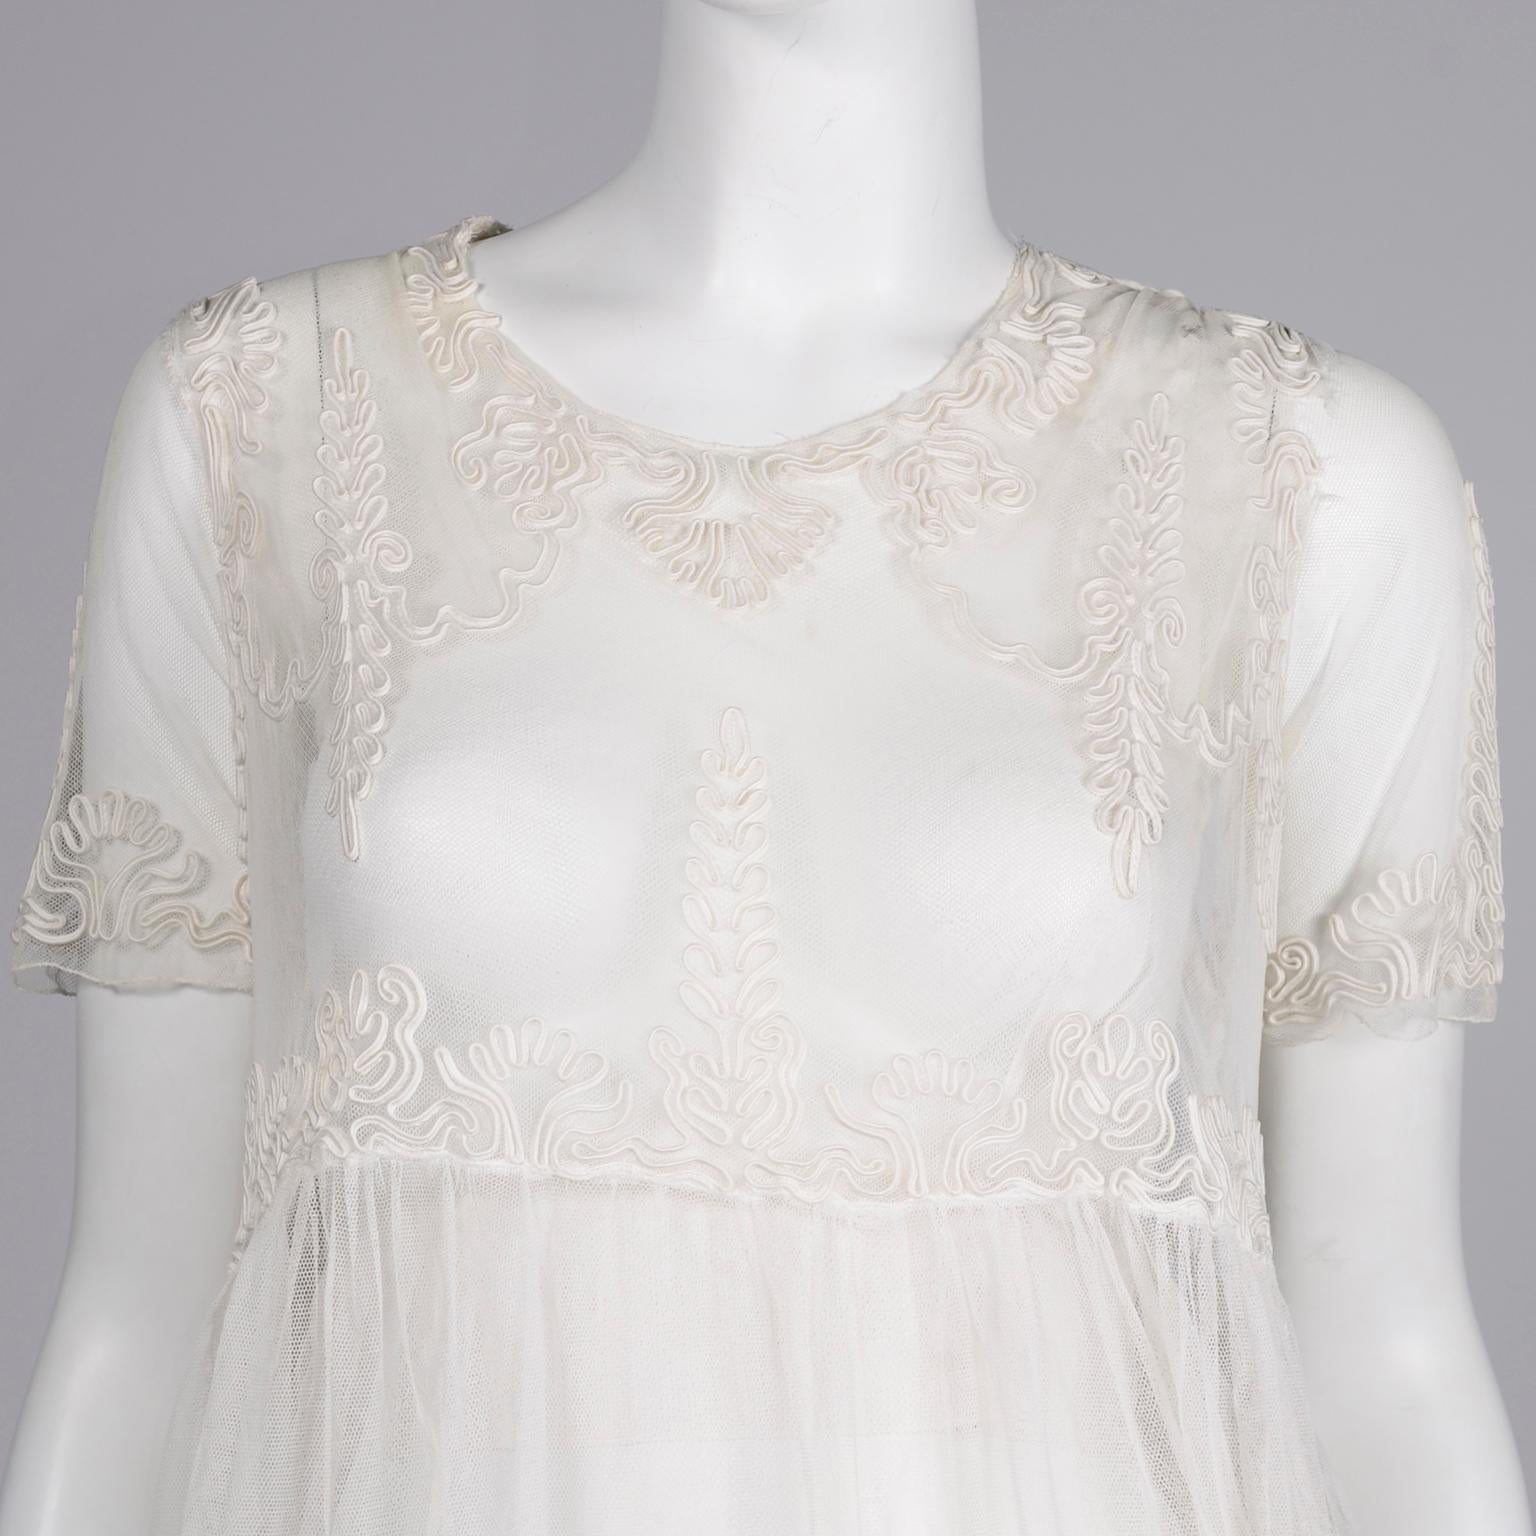 Antique Edwardian 1910s Vintage Ivory Net Tulle Dress W Soutache Embroidery Trim For Sale 1